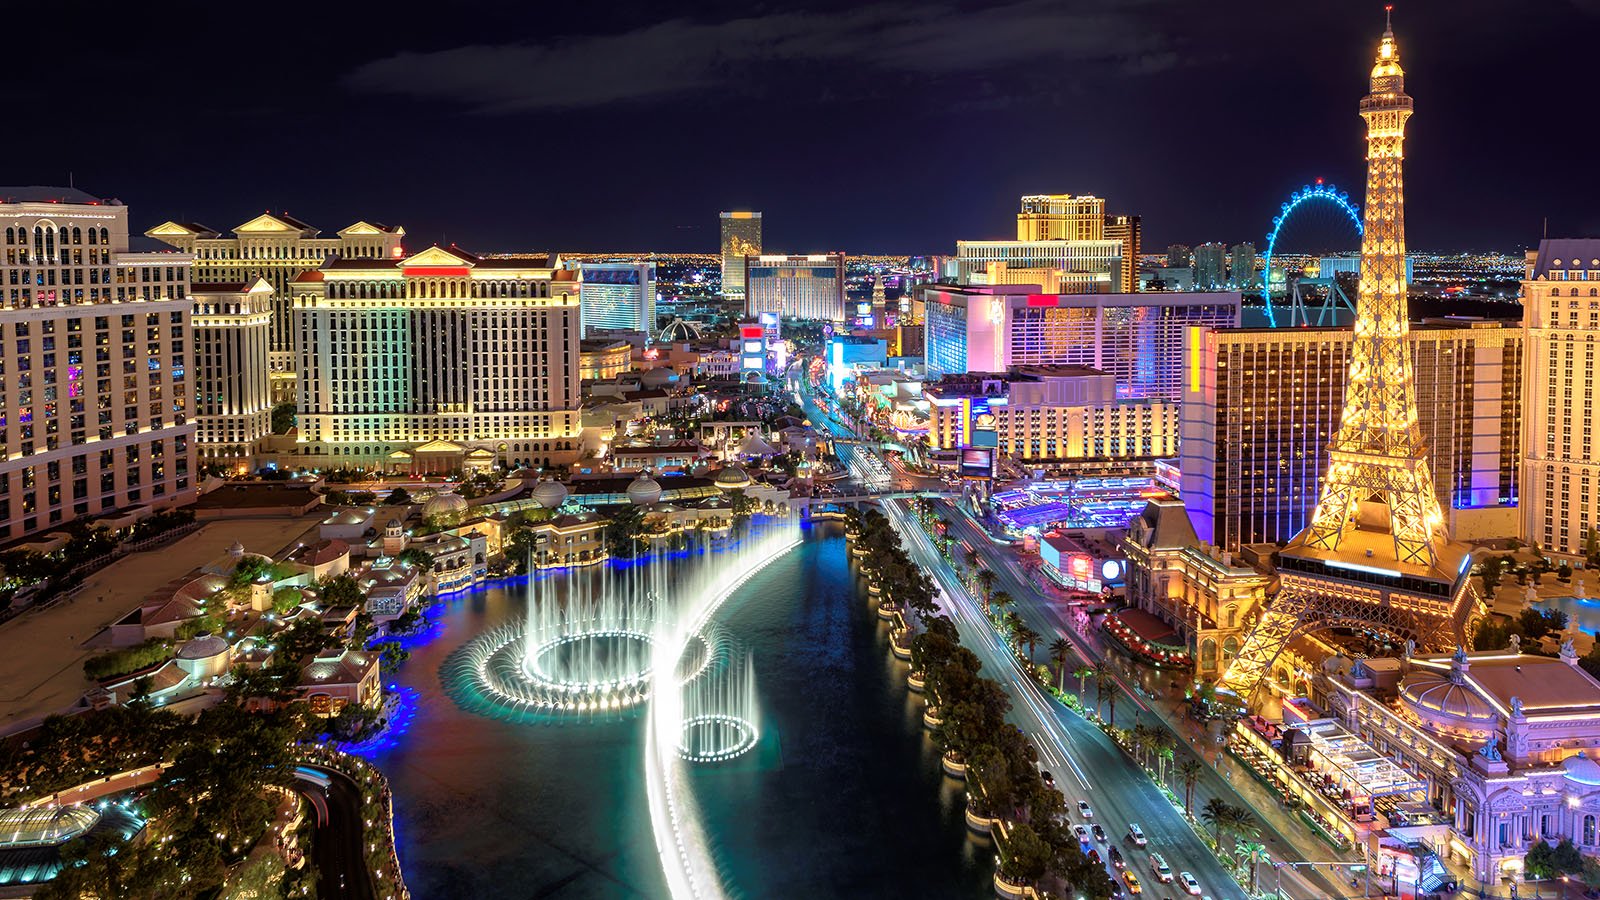 Las Vegas travel - Lonely Planet